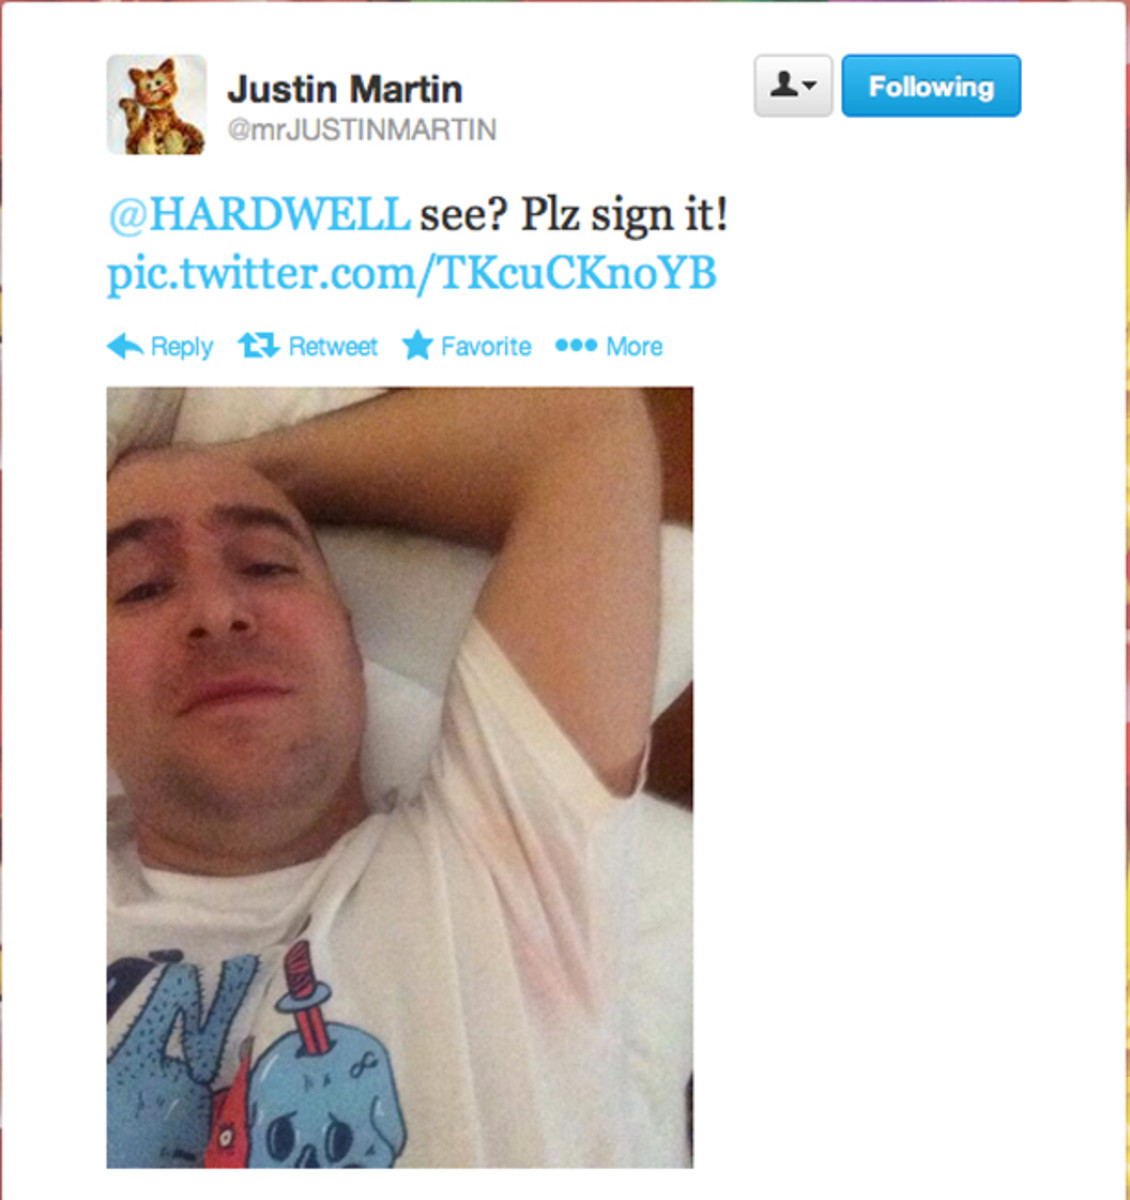 Justin Martin Sweats Neon Pink EDM, Asks Hardwell To Autograph It - EDM Culture